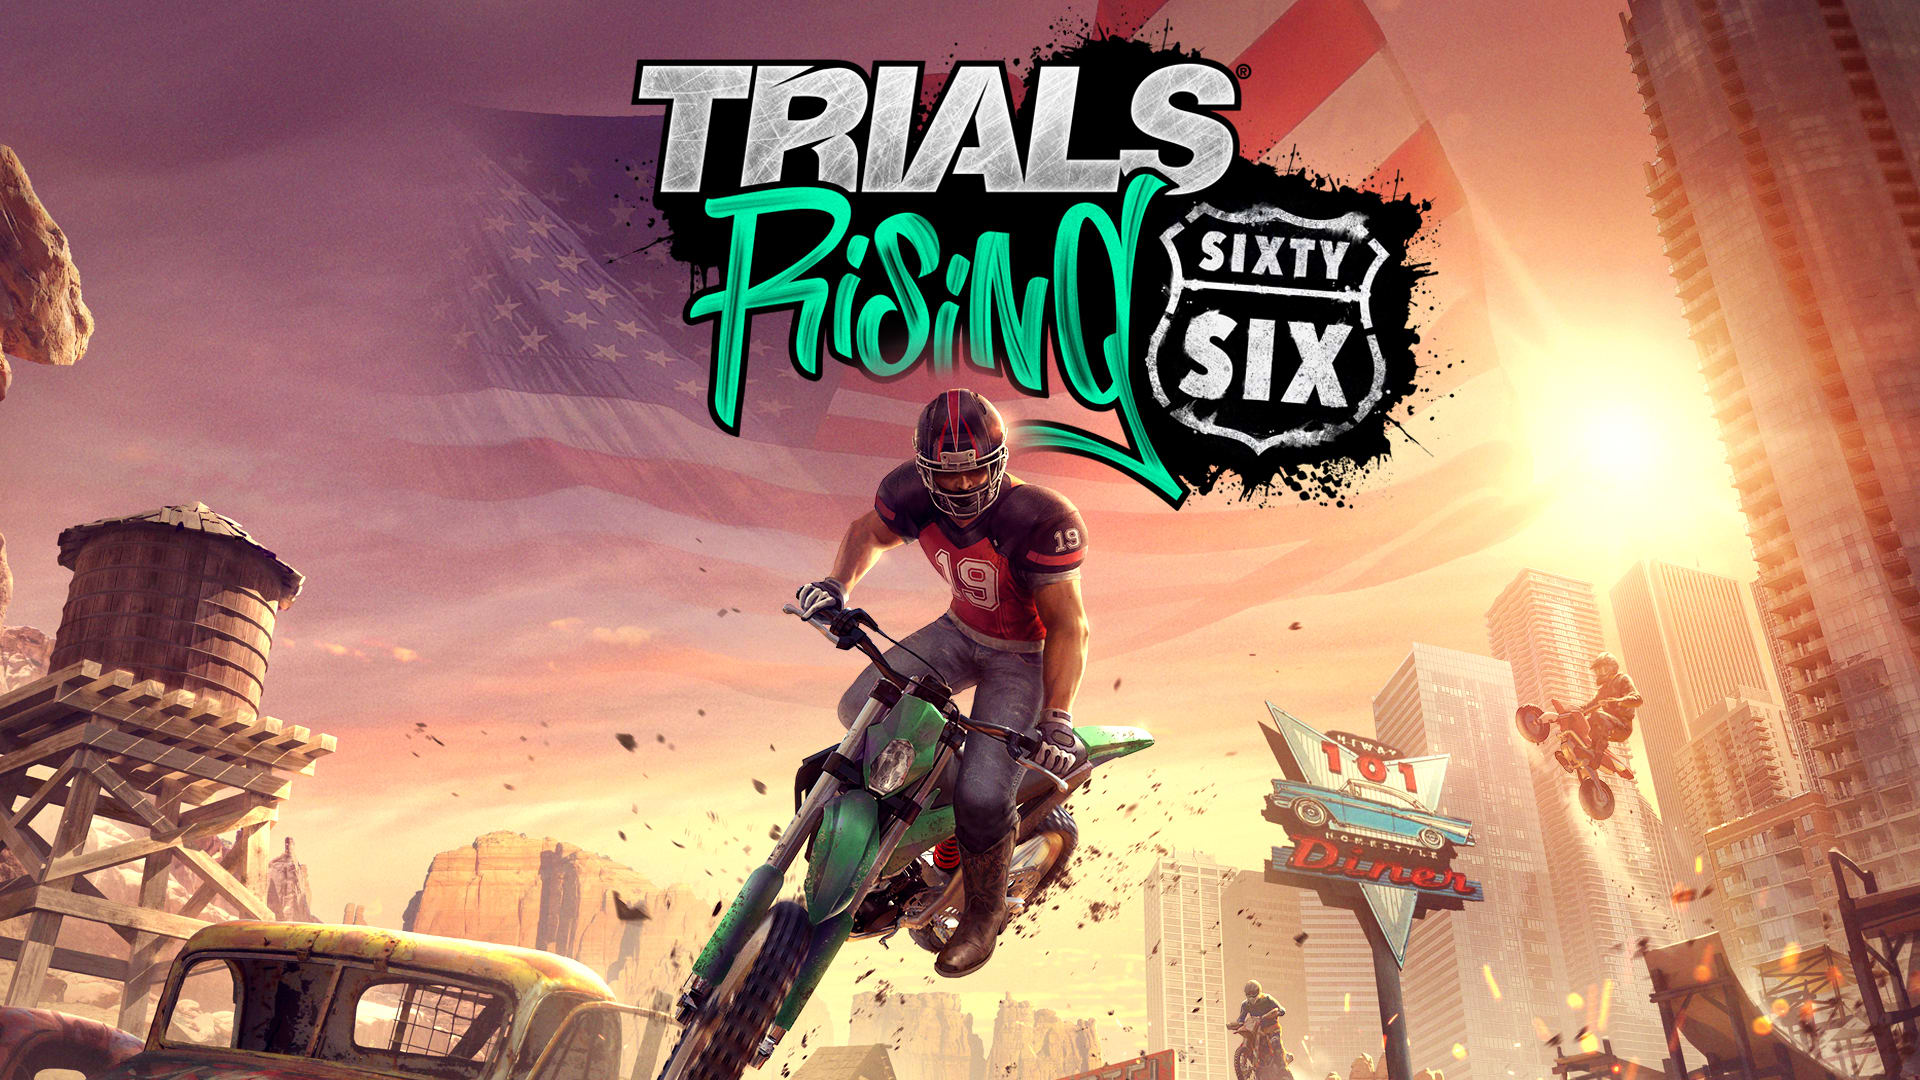 Trials Rising - Sixty Six 